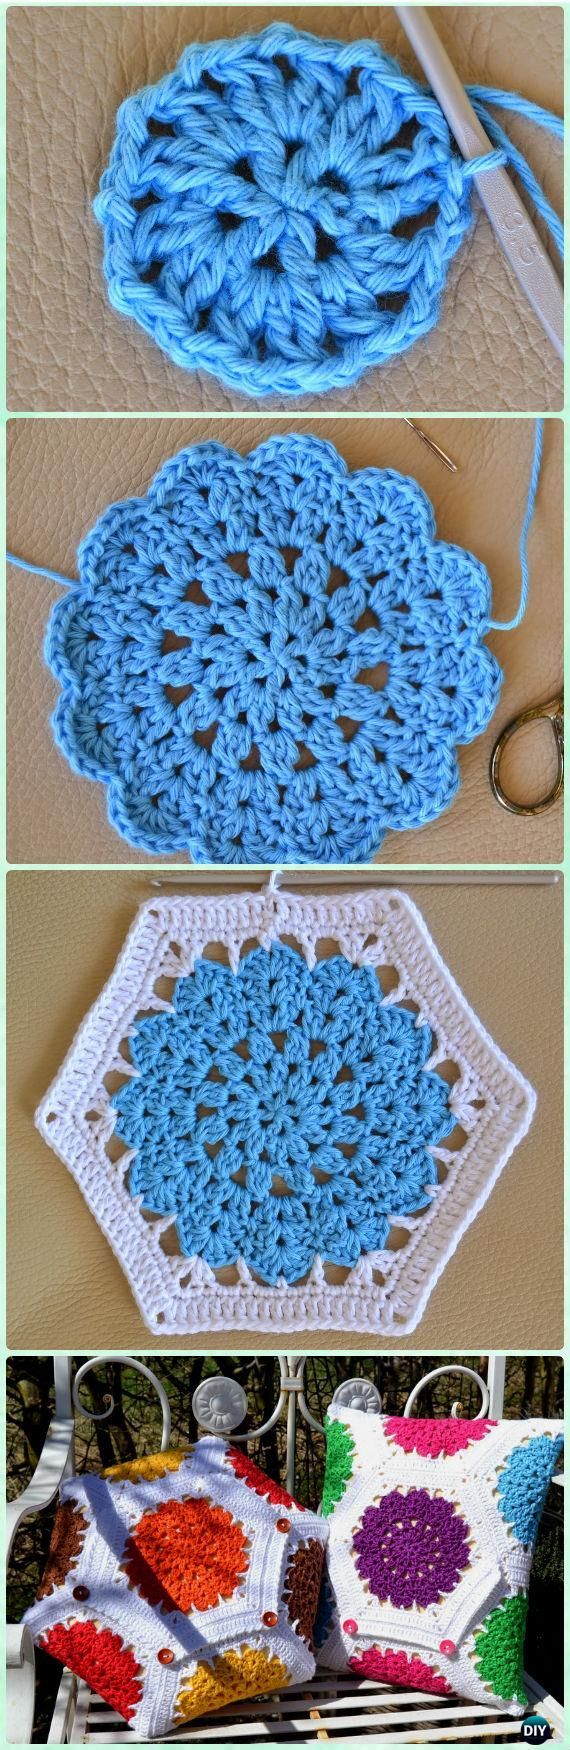 Crochet Mandala Flower Hexagon Motif Free Pattern – Crochet Hexagon Motif Free Patterns